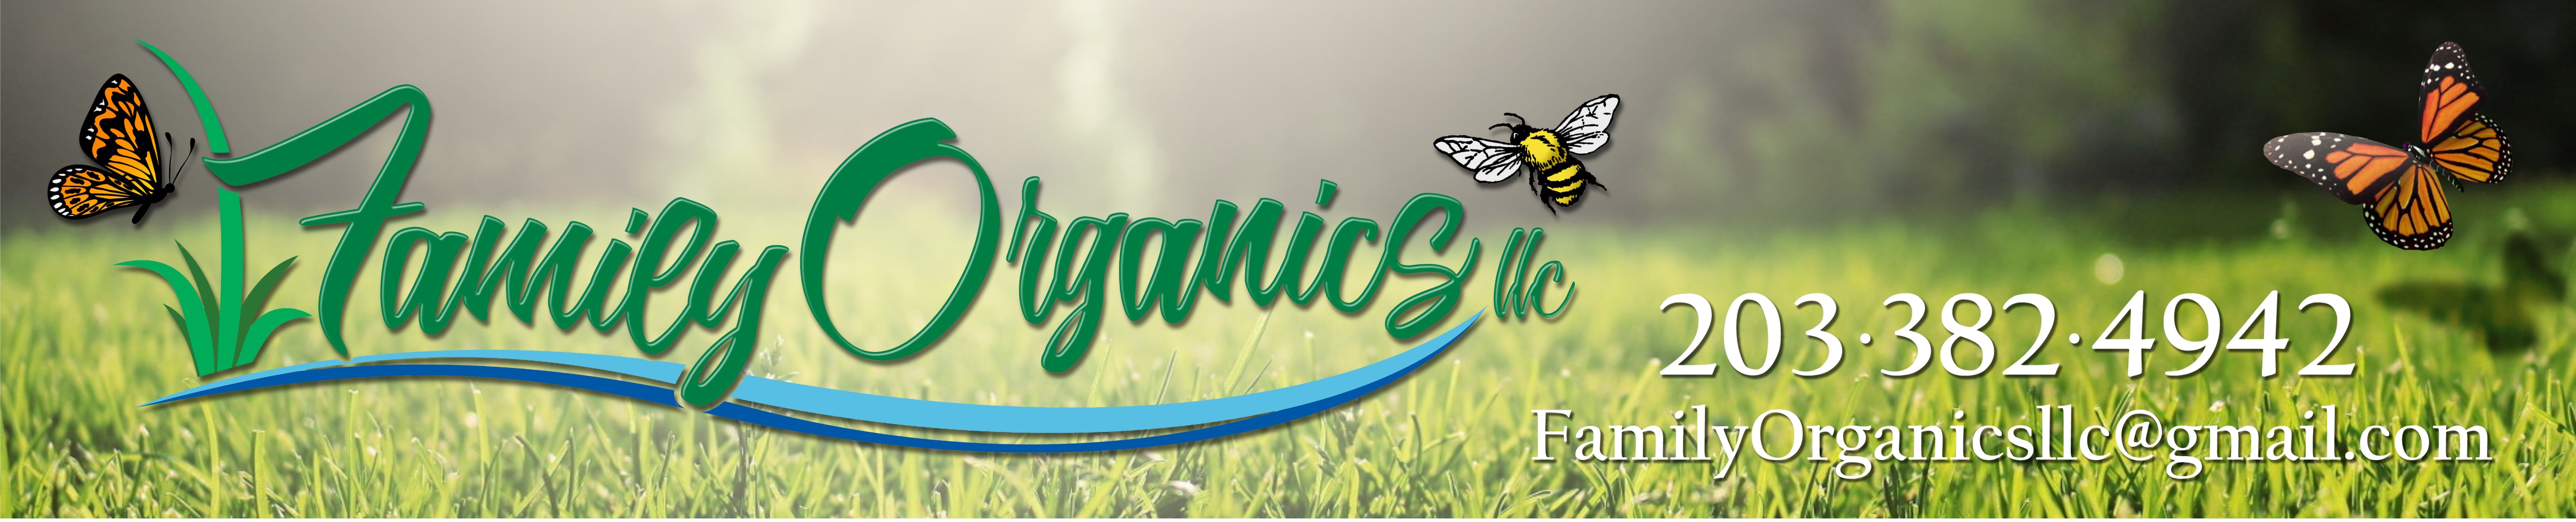 Family Organics LLC website banner